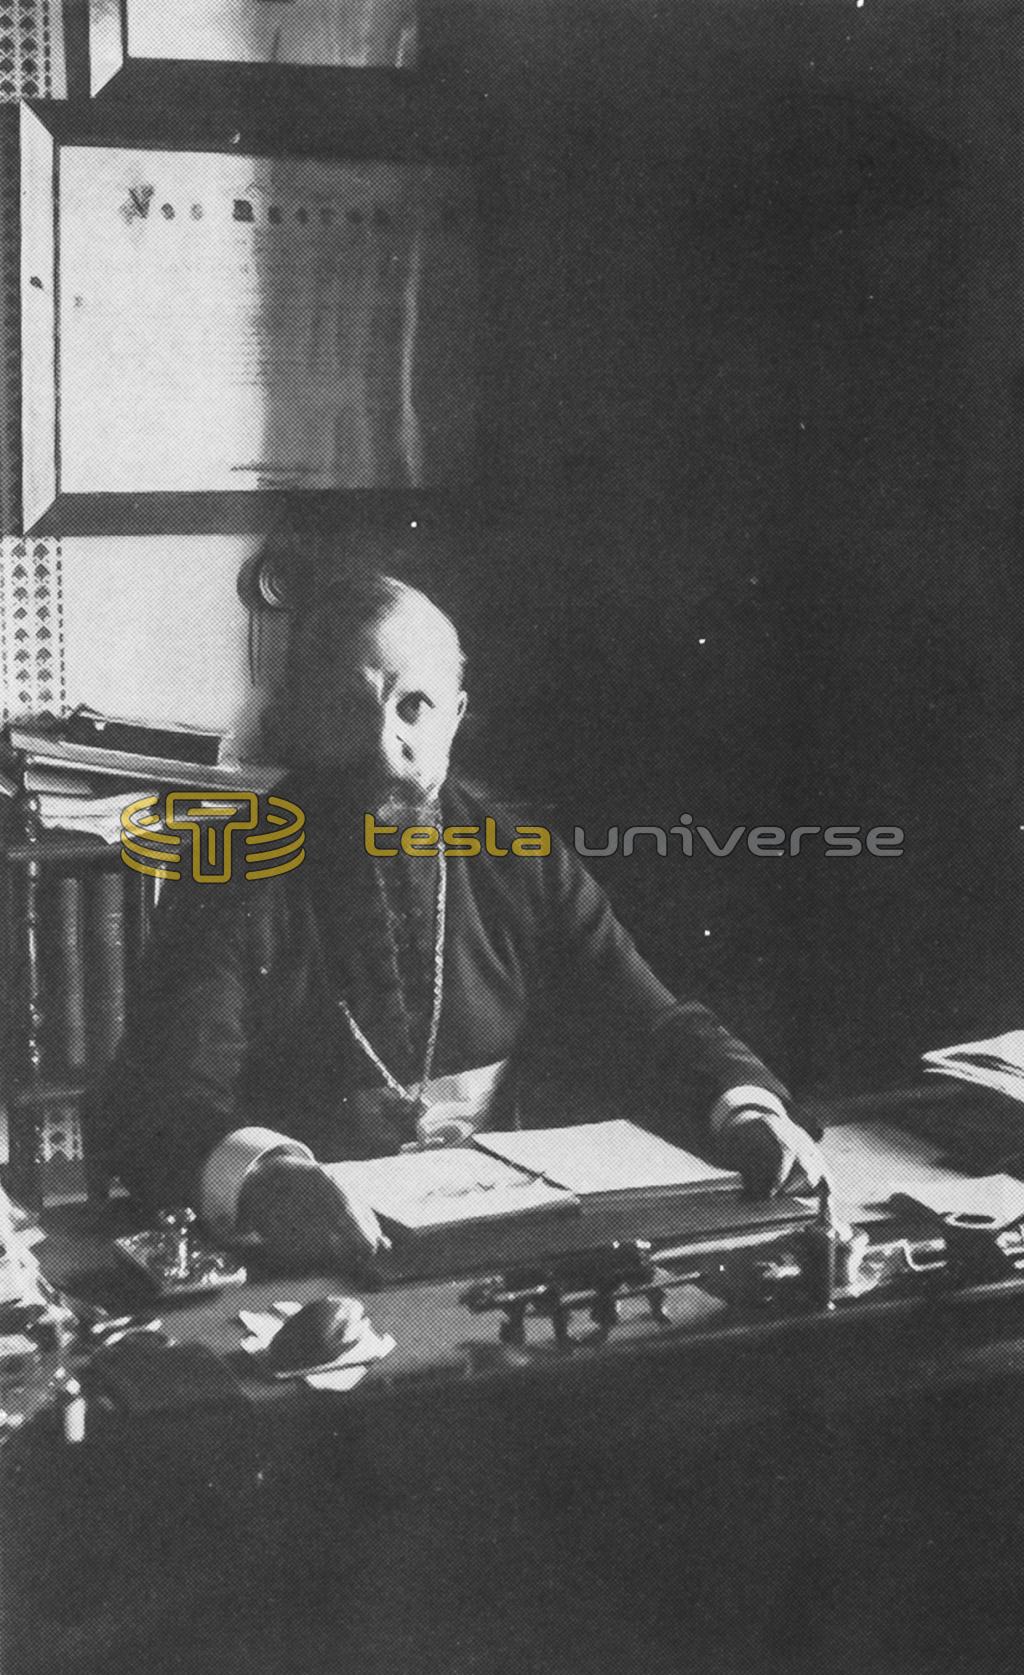 Petar Petronije Jovin Trbojević, Nikola Tesla's nephew